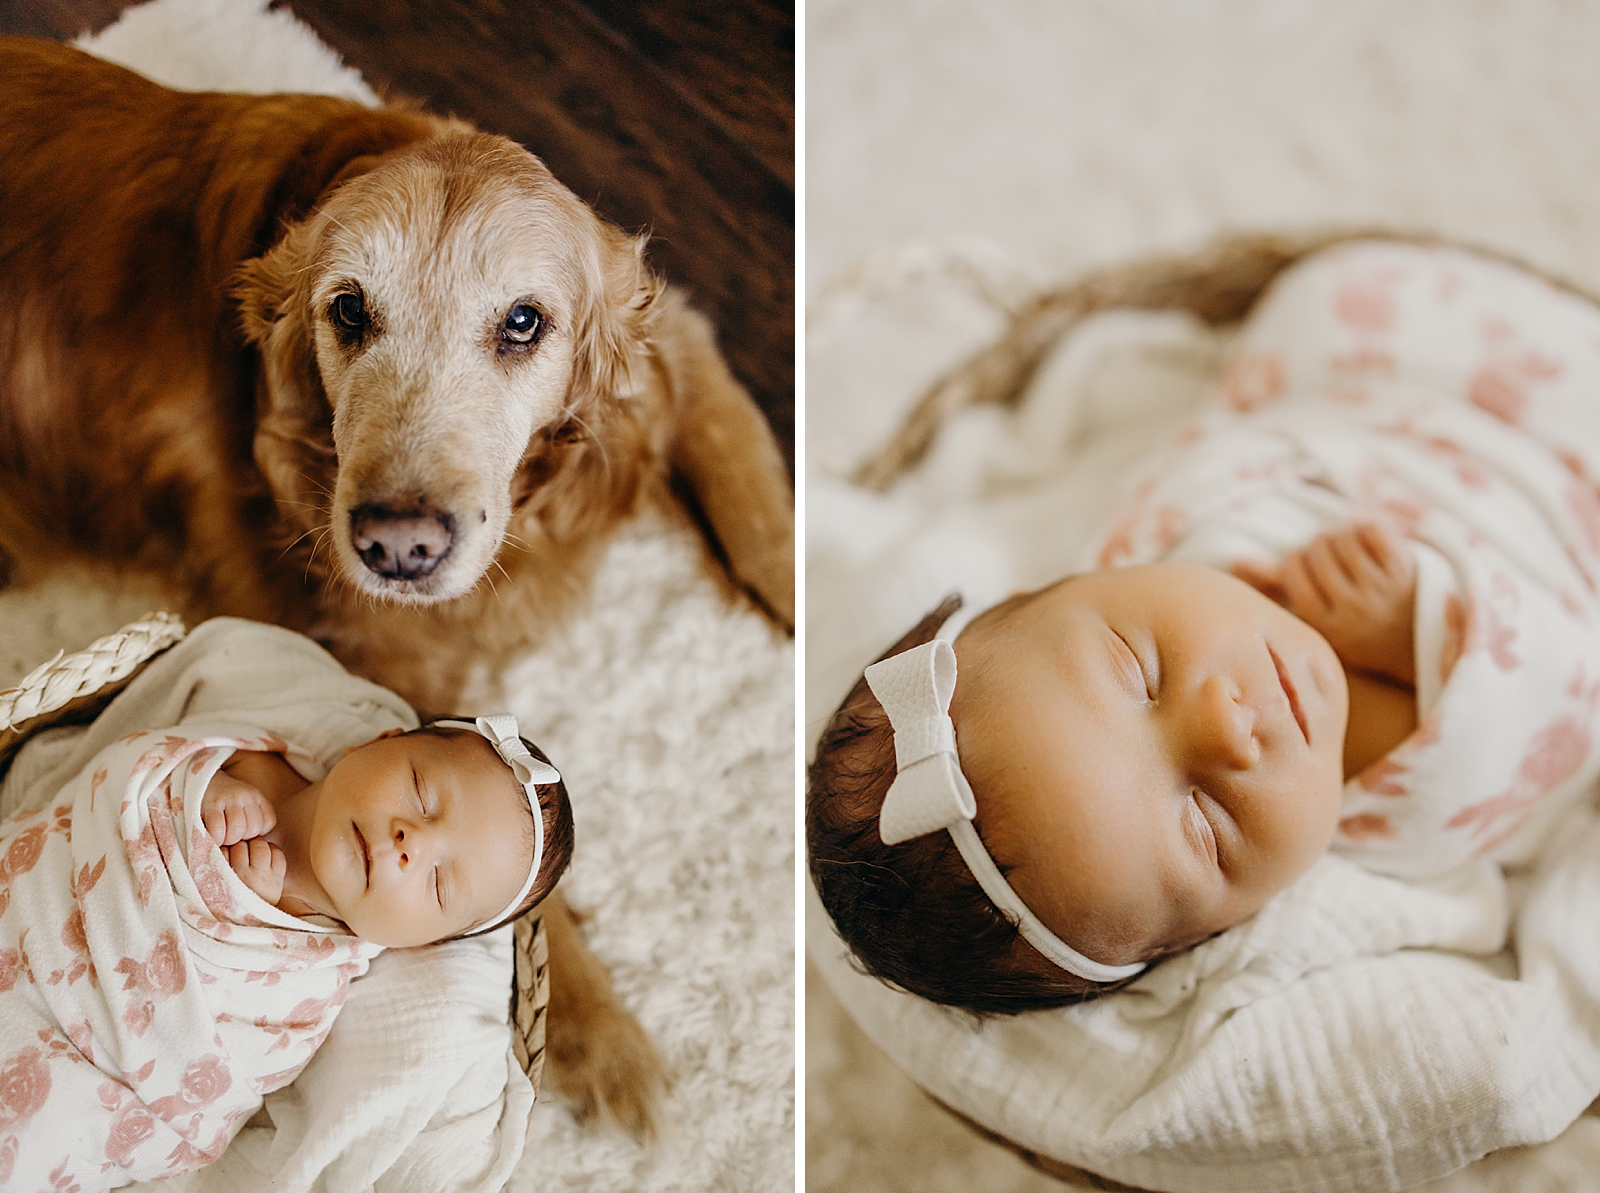 Dog sitting next to sleeping baby girl protecting her South Florida Newborn Photography Photography captured by South Florida Family Photographer Maggie Alvarez Photography